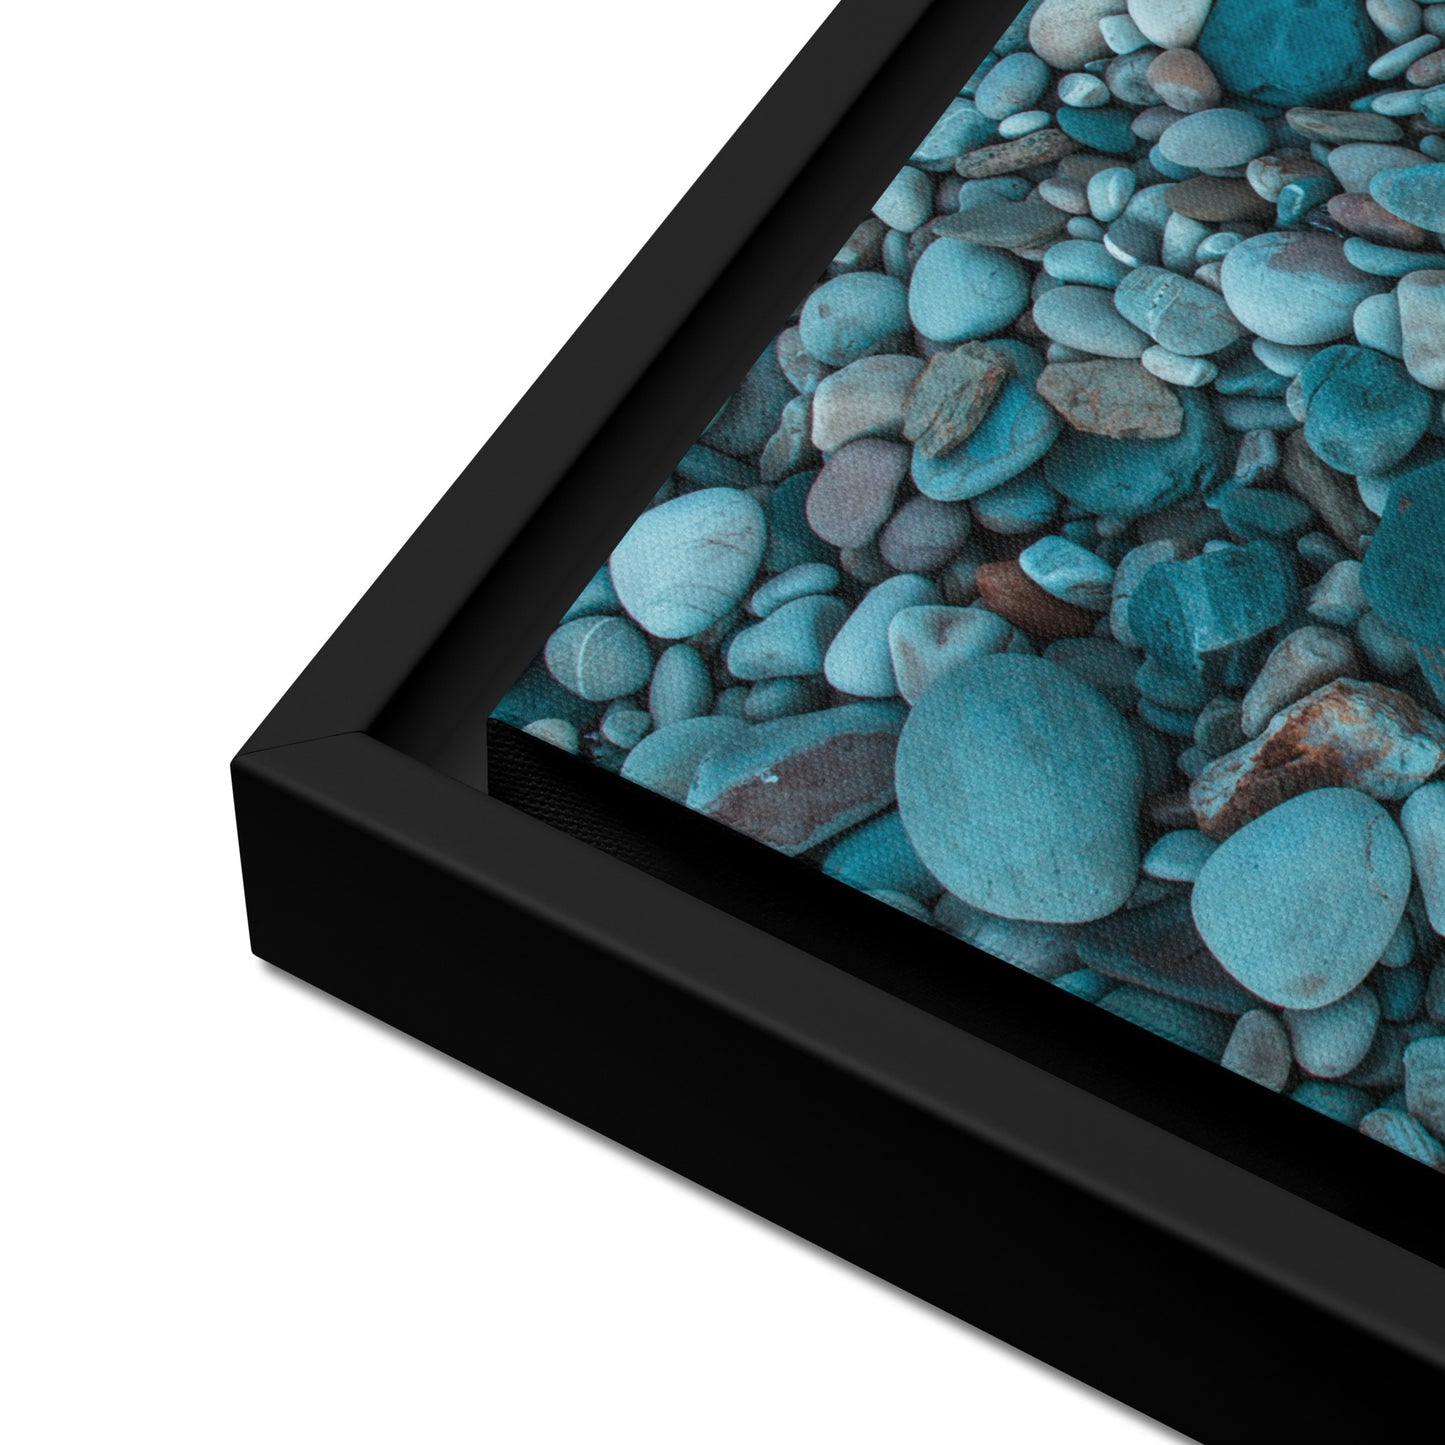 Mireille Fine Art, smooth beach stones, canvas print artwork on floater frames